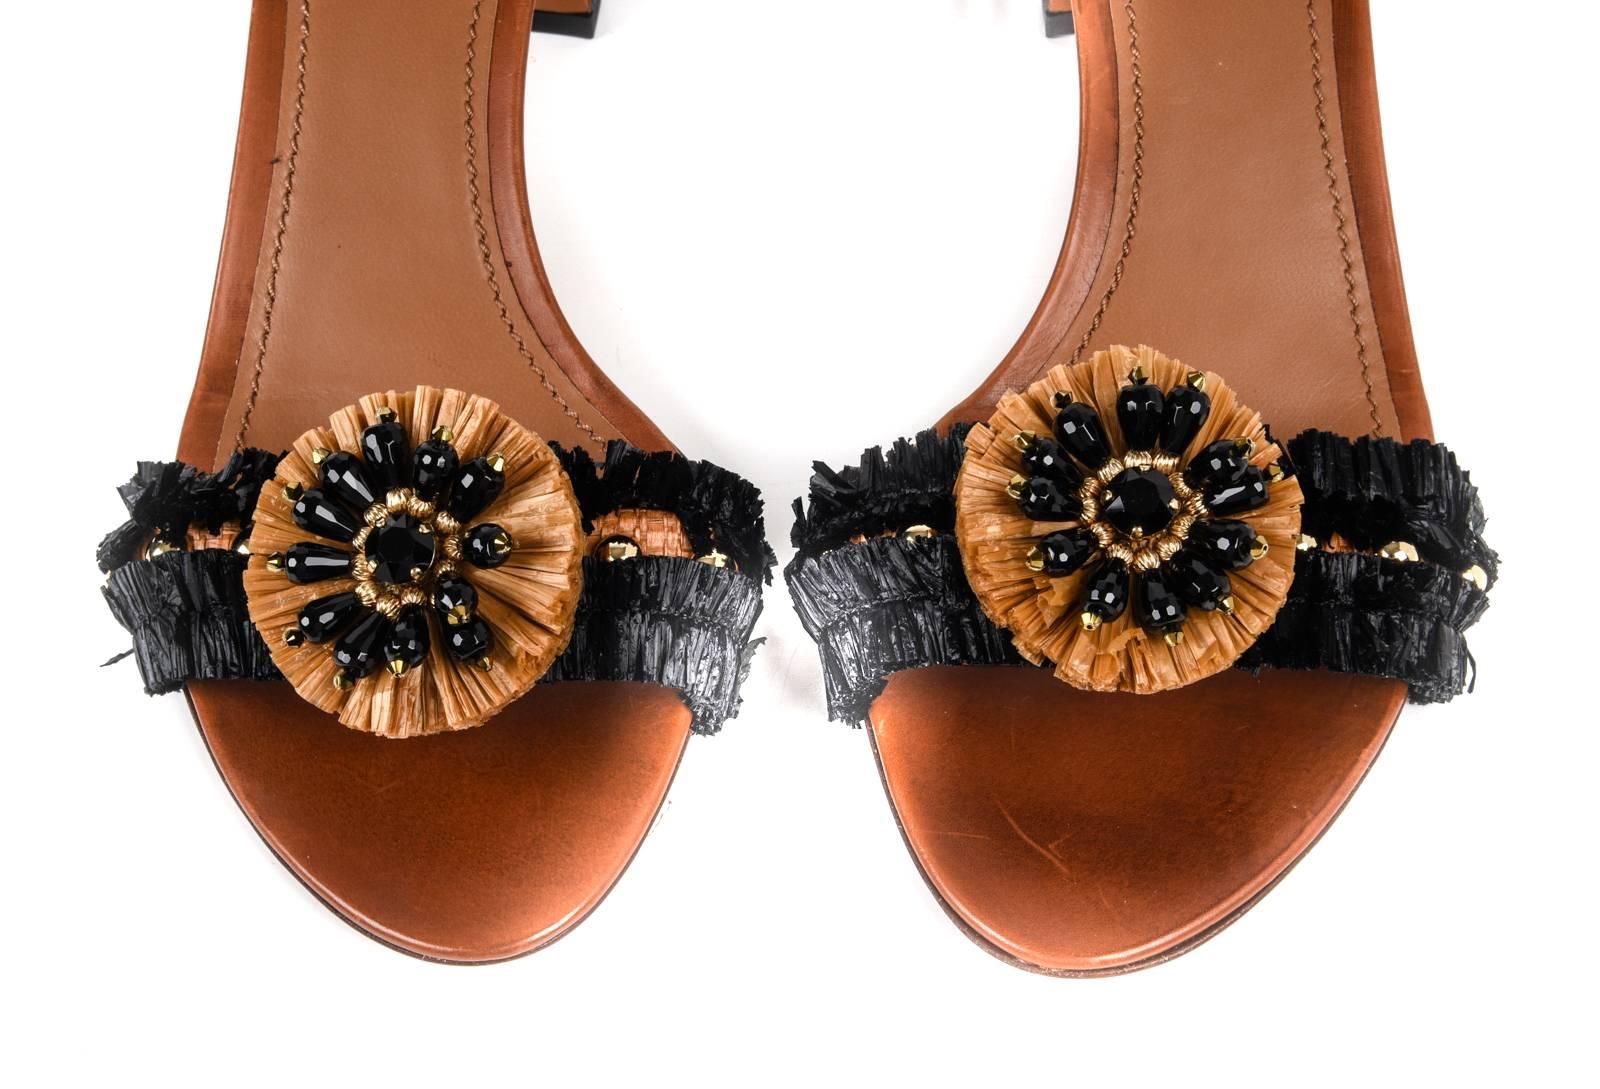 Dolce&Gabbana Shoe Rafia  Leather Ankle Tie Black  Camel 40.5 / 10.5 New  2